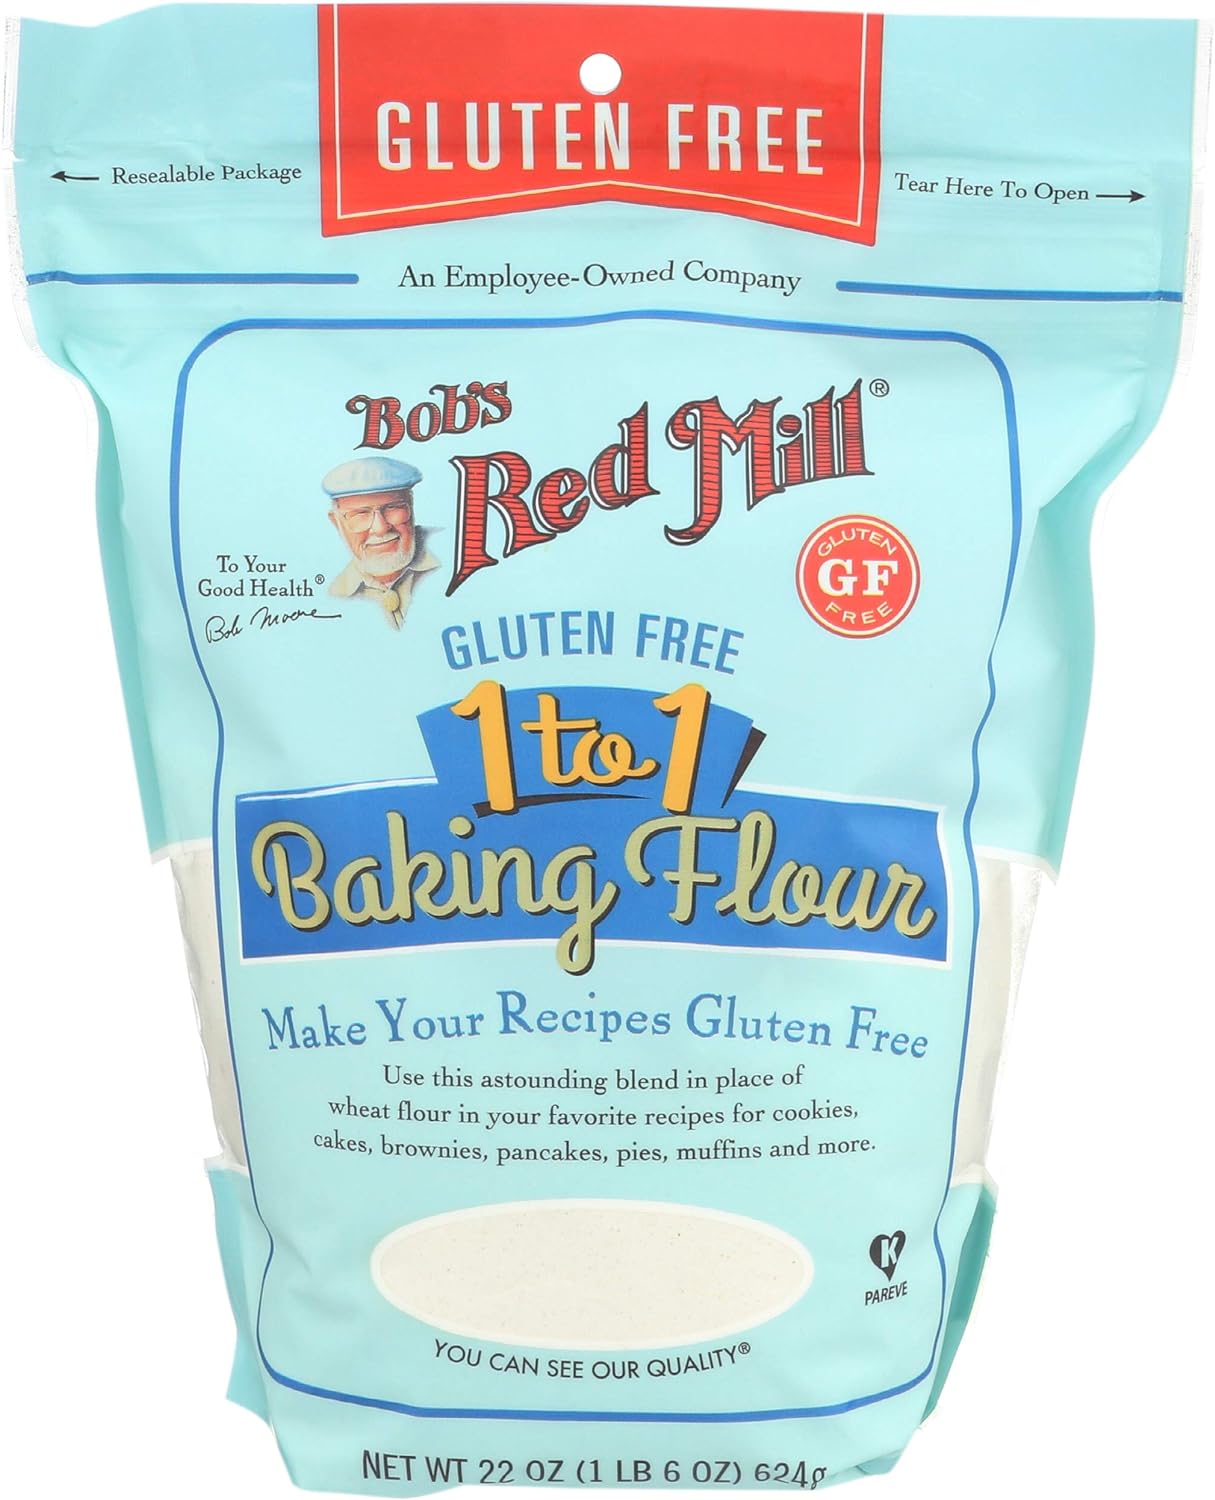 Bob's Red Mill 1-to-1 Baking Flour - Gluten Free